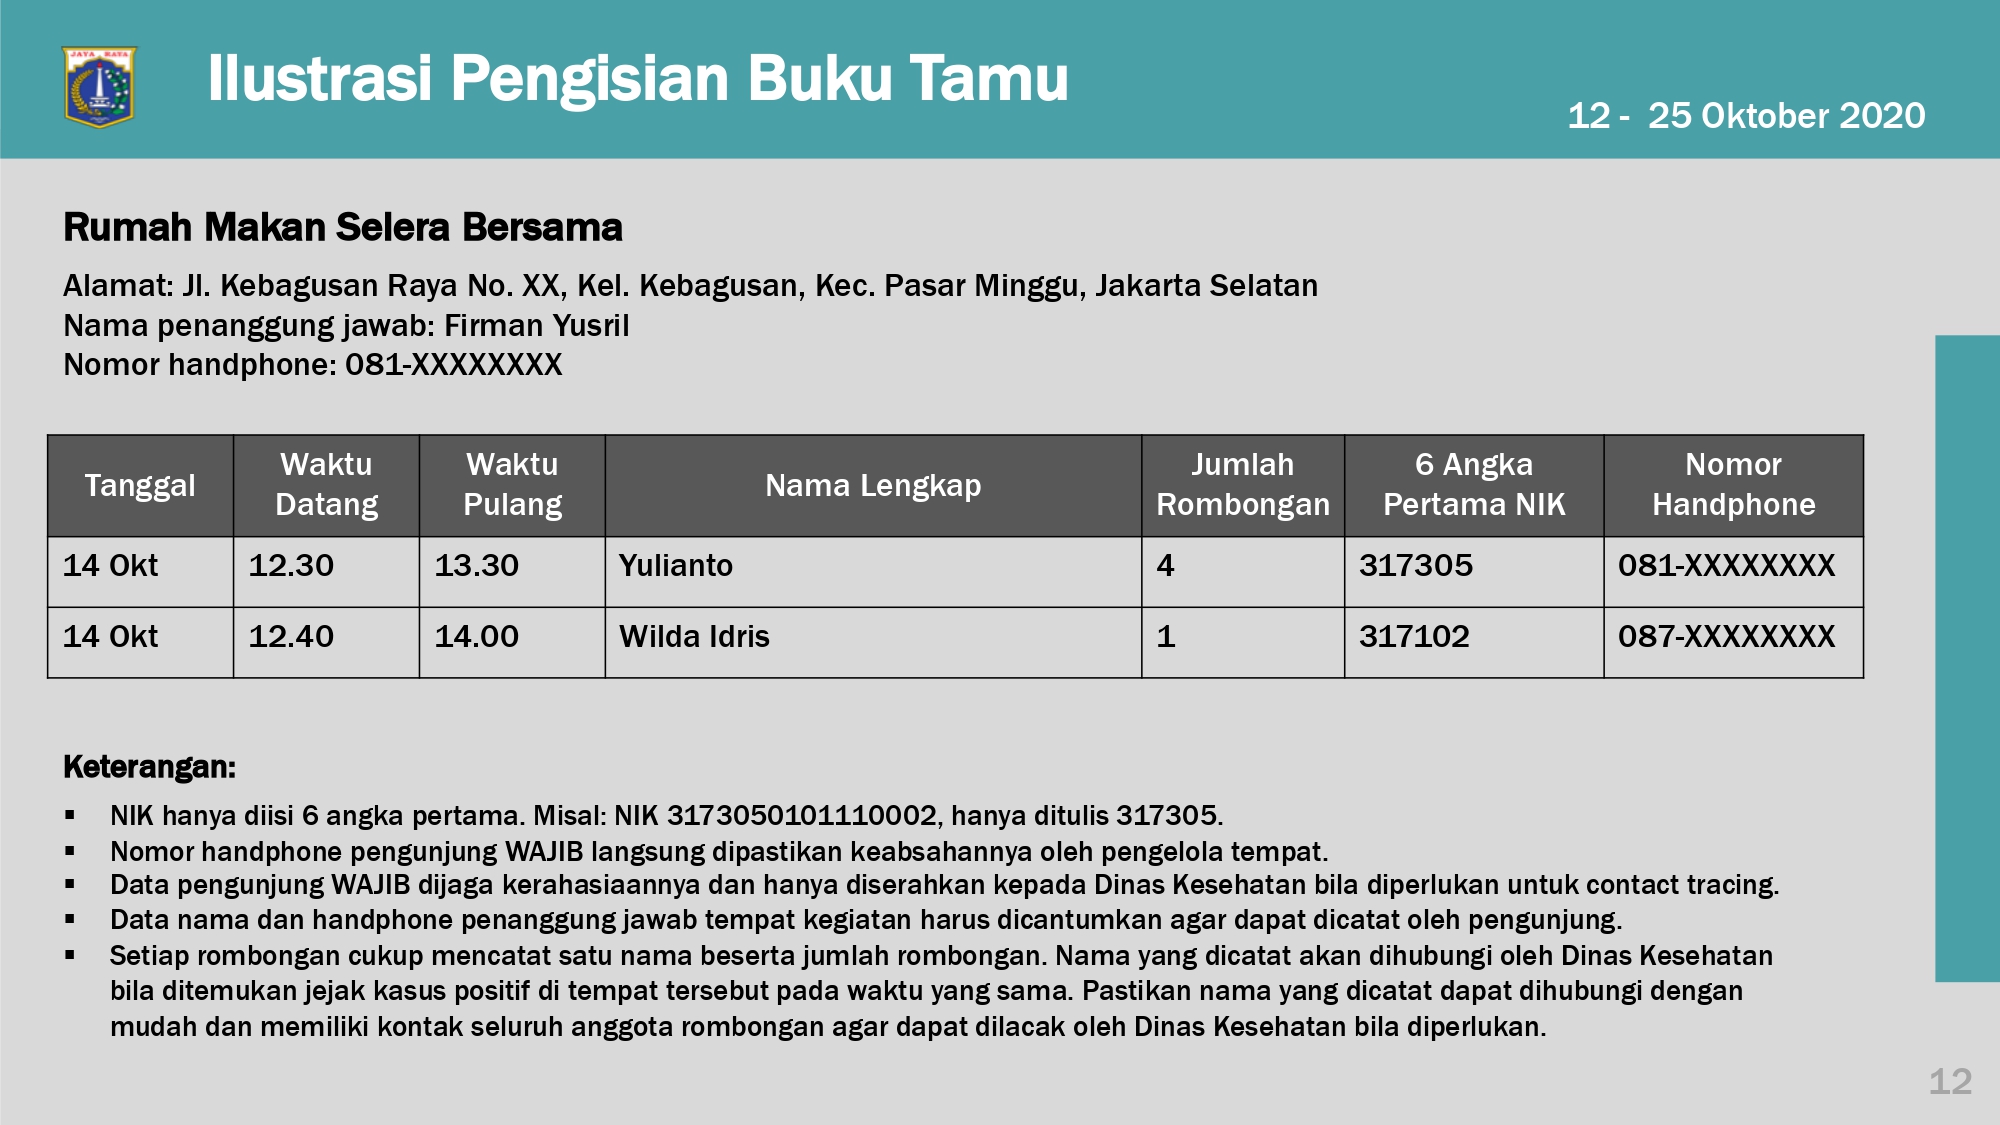 Pengaturan PSBB Transisi DKI Jakarta 12-25 Oktober 2020_page-0012